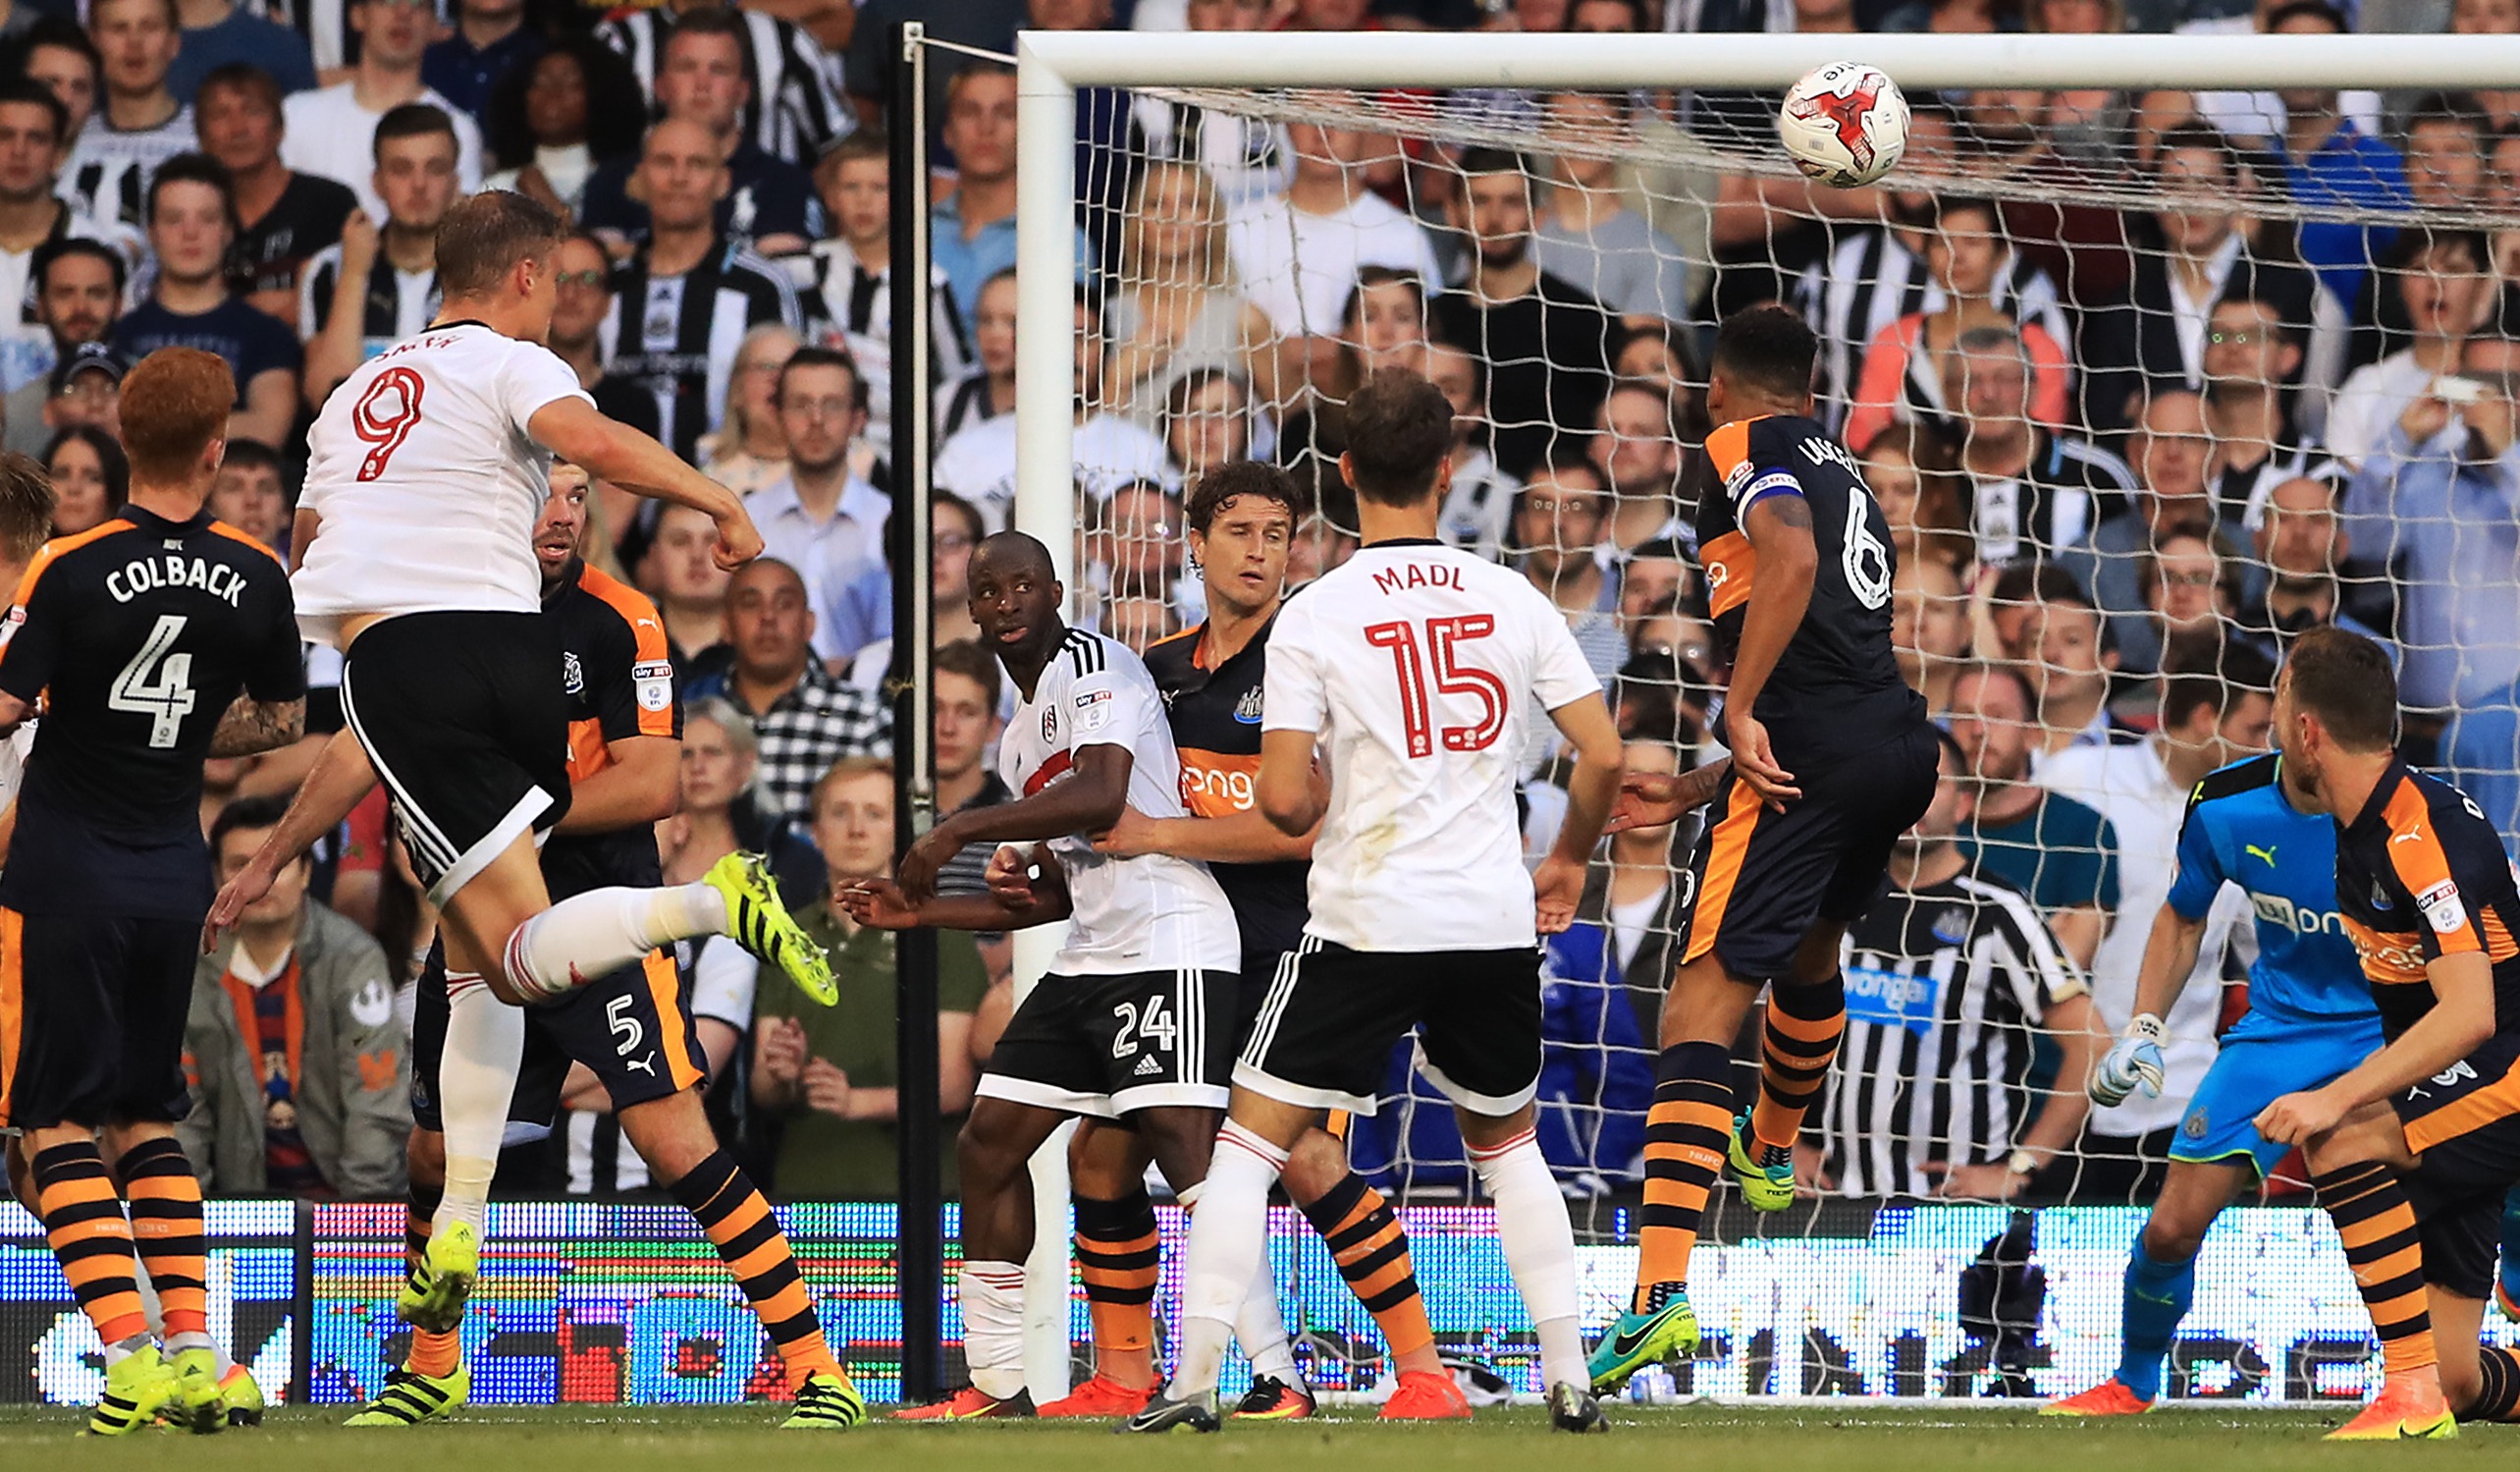 Matt Smith's header gave Fulham a deserved victory